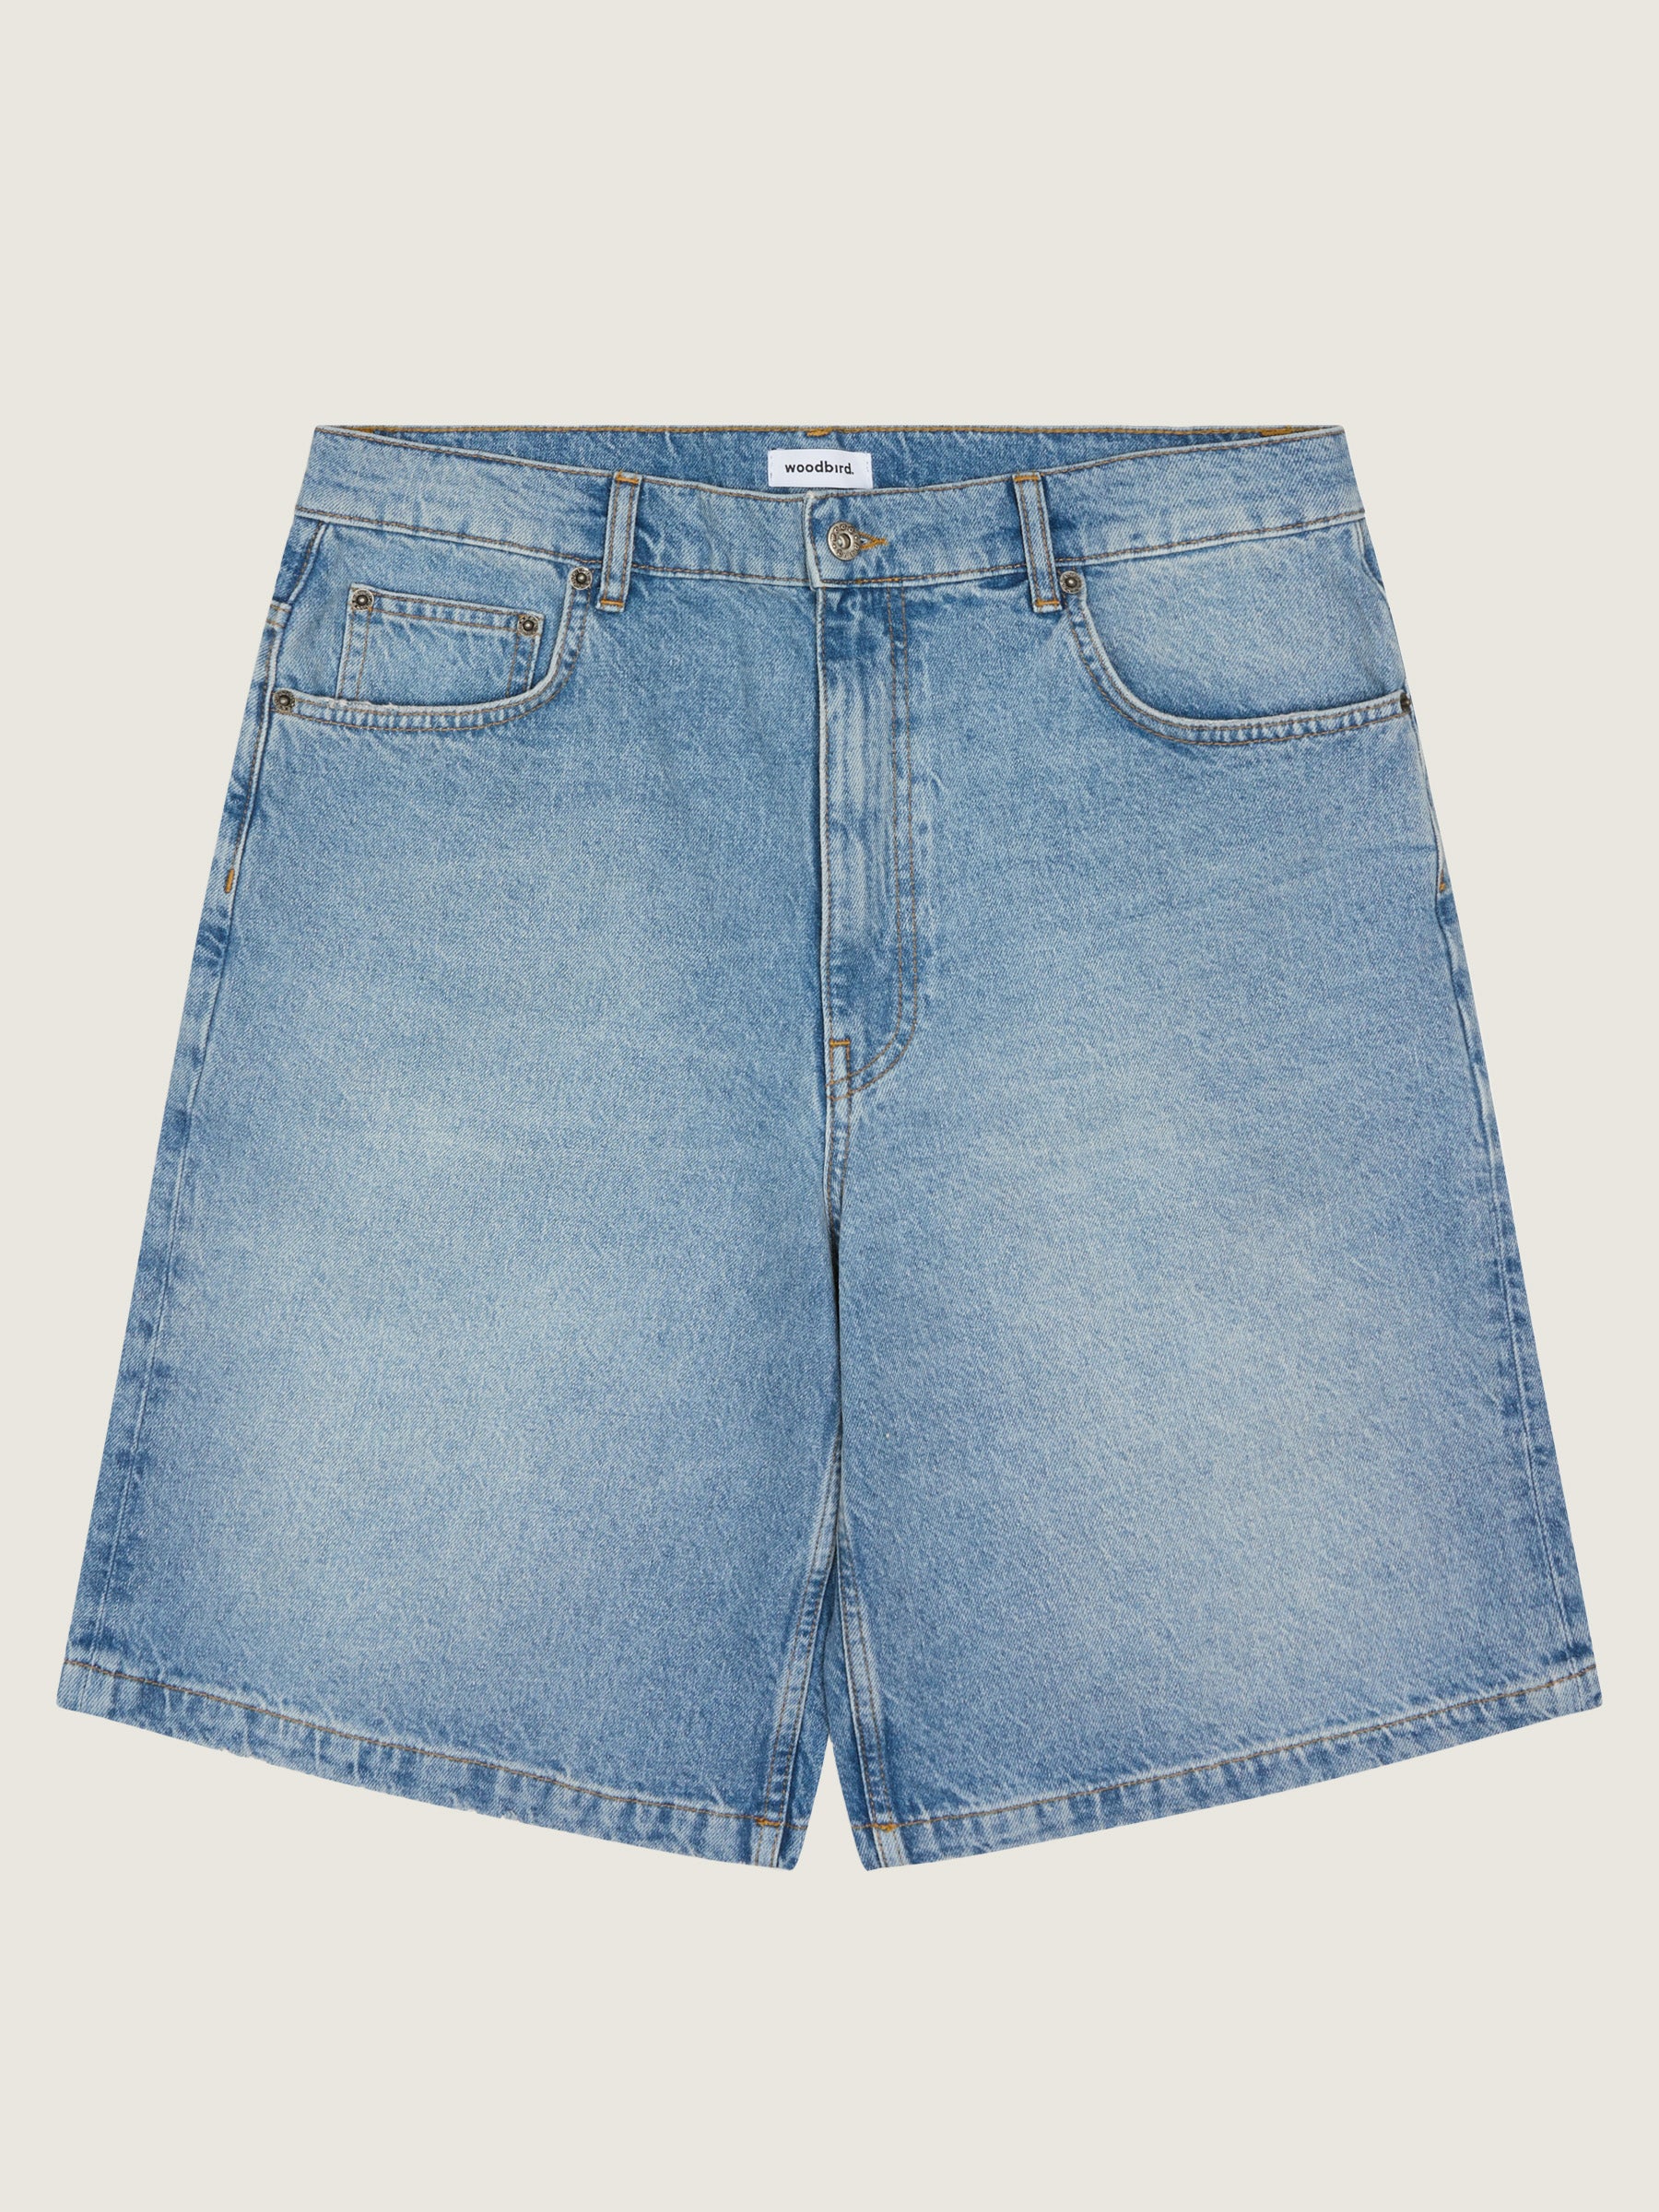 Woodbird Rami Store Shorts Shorts Authentic Blue